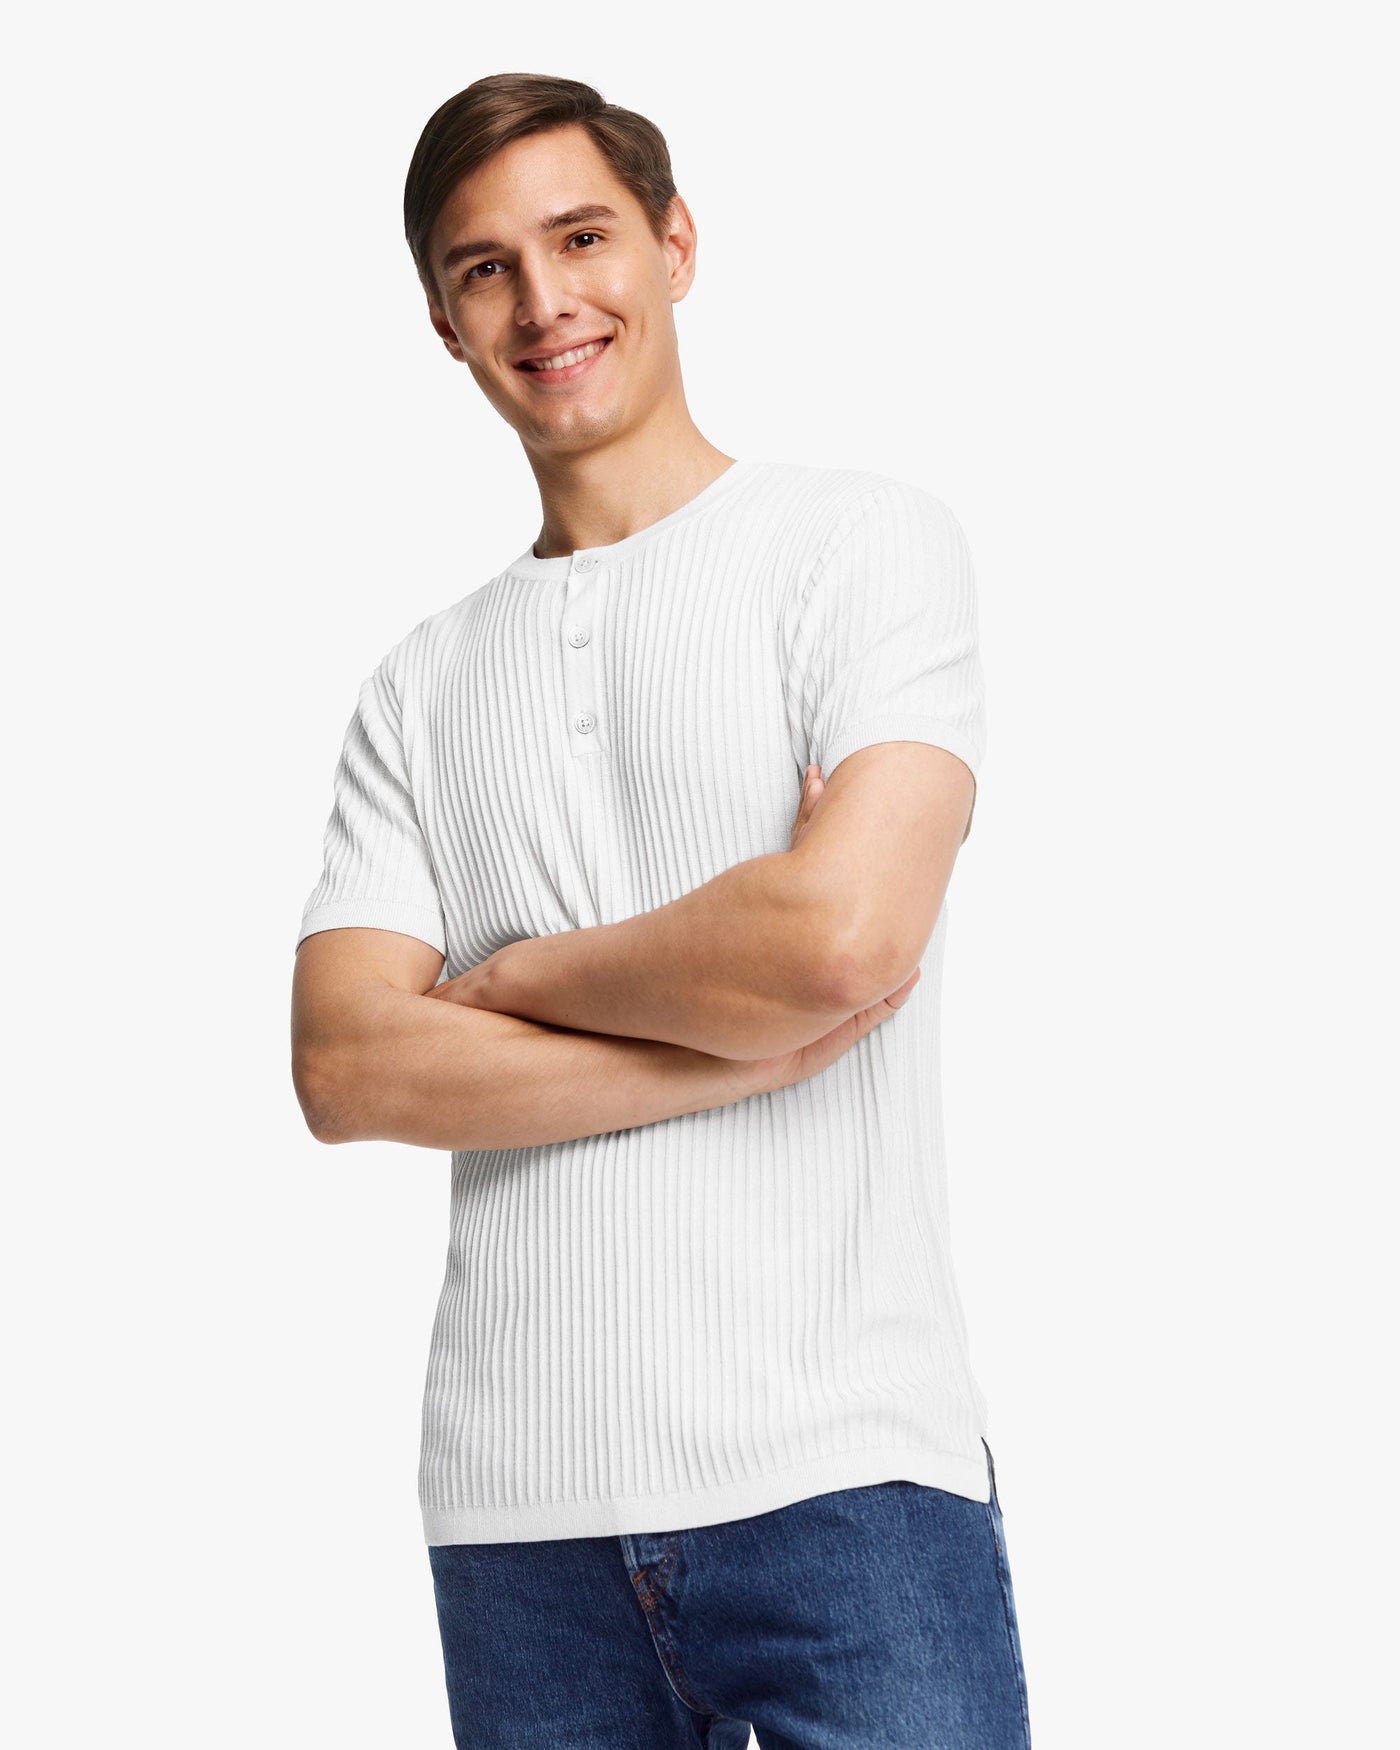 Jacquard Silk Knit Men T shirt Natural White LILYSILK Factory